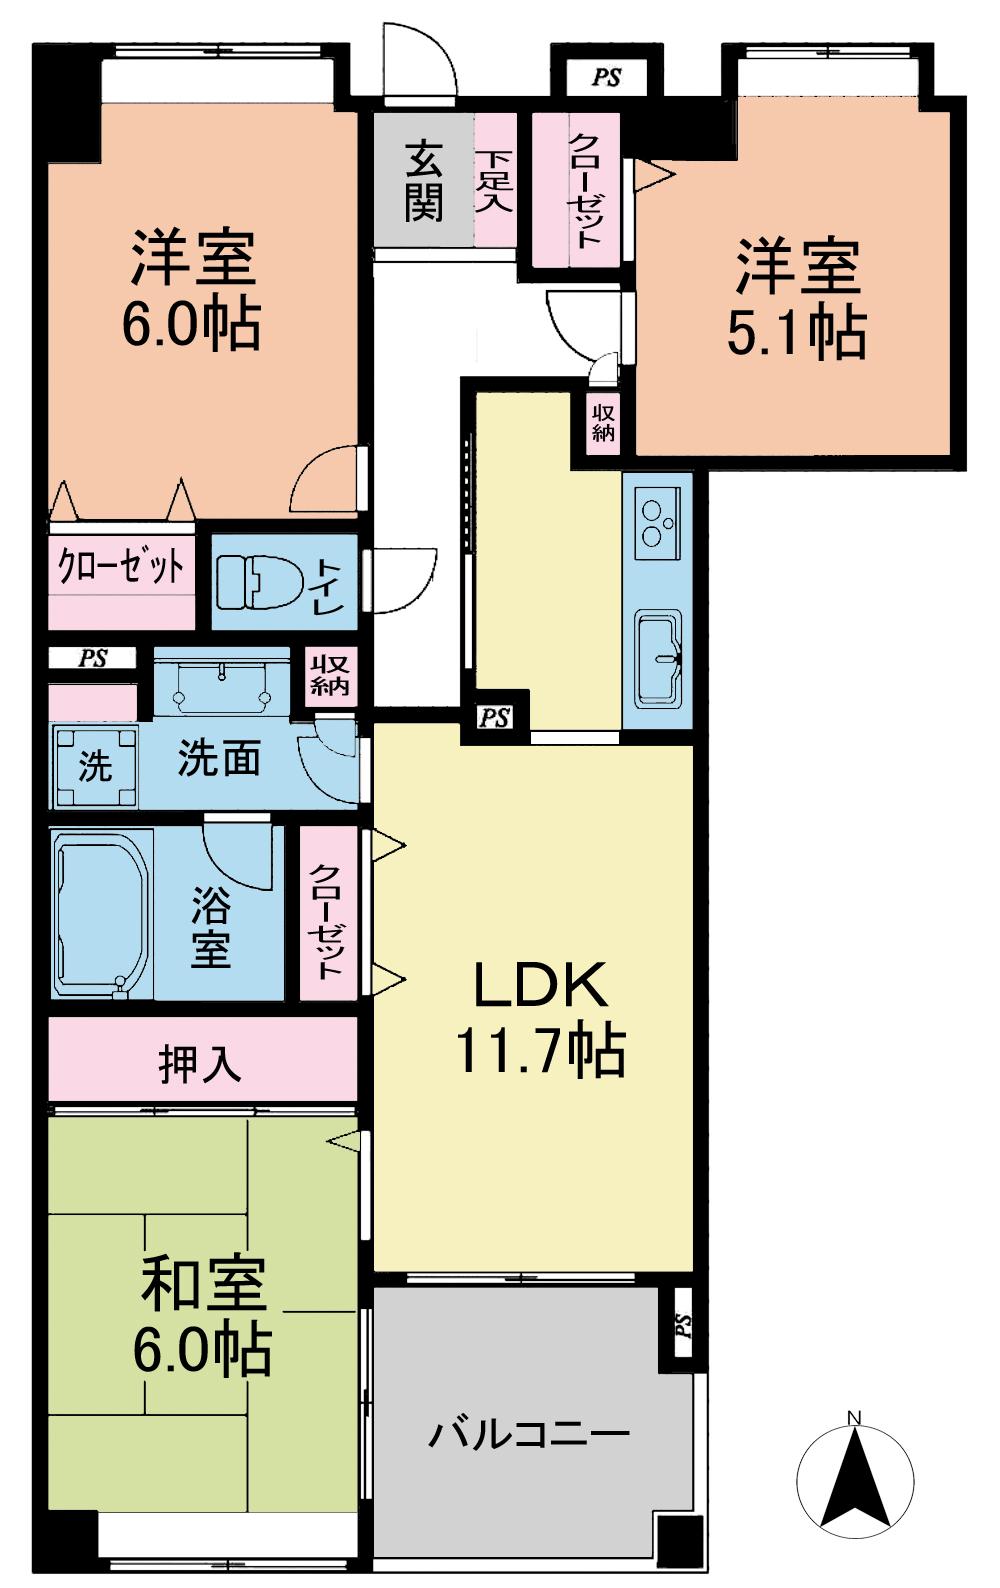 Floor plan. 3LDK, Price 27,900,000 yen, Occupied area 68.93 sq m , Balcony area 6.24 sq m